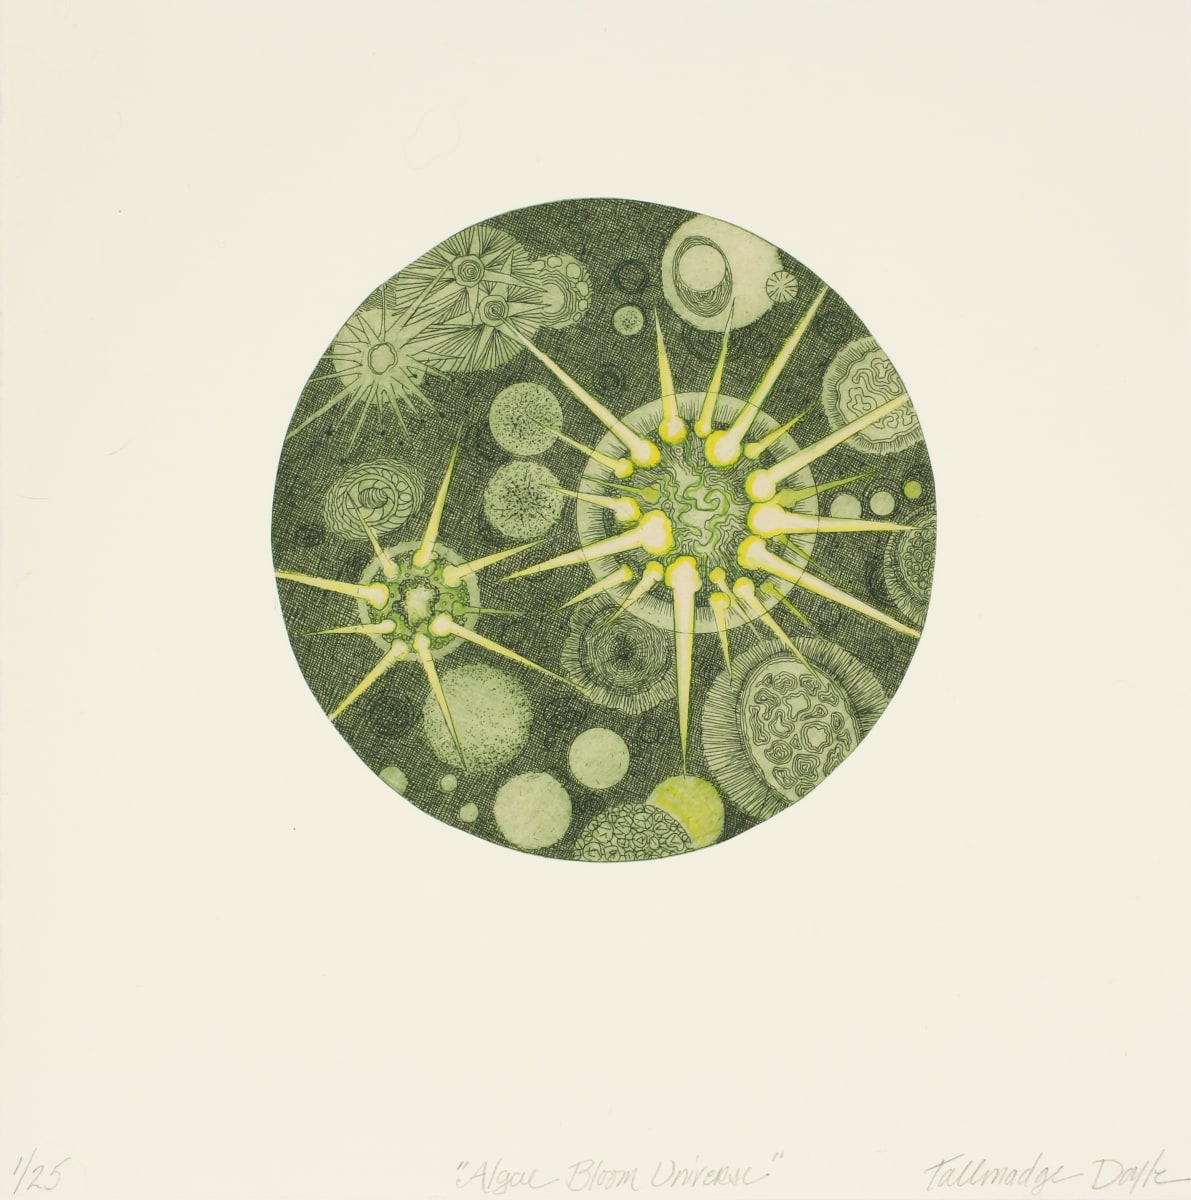 Algae Bloom Universe by Tallmadge Doyle 